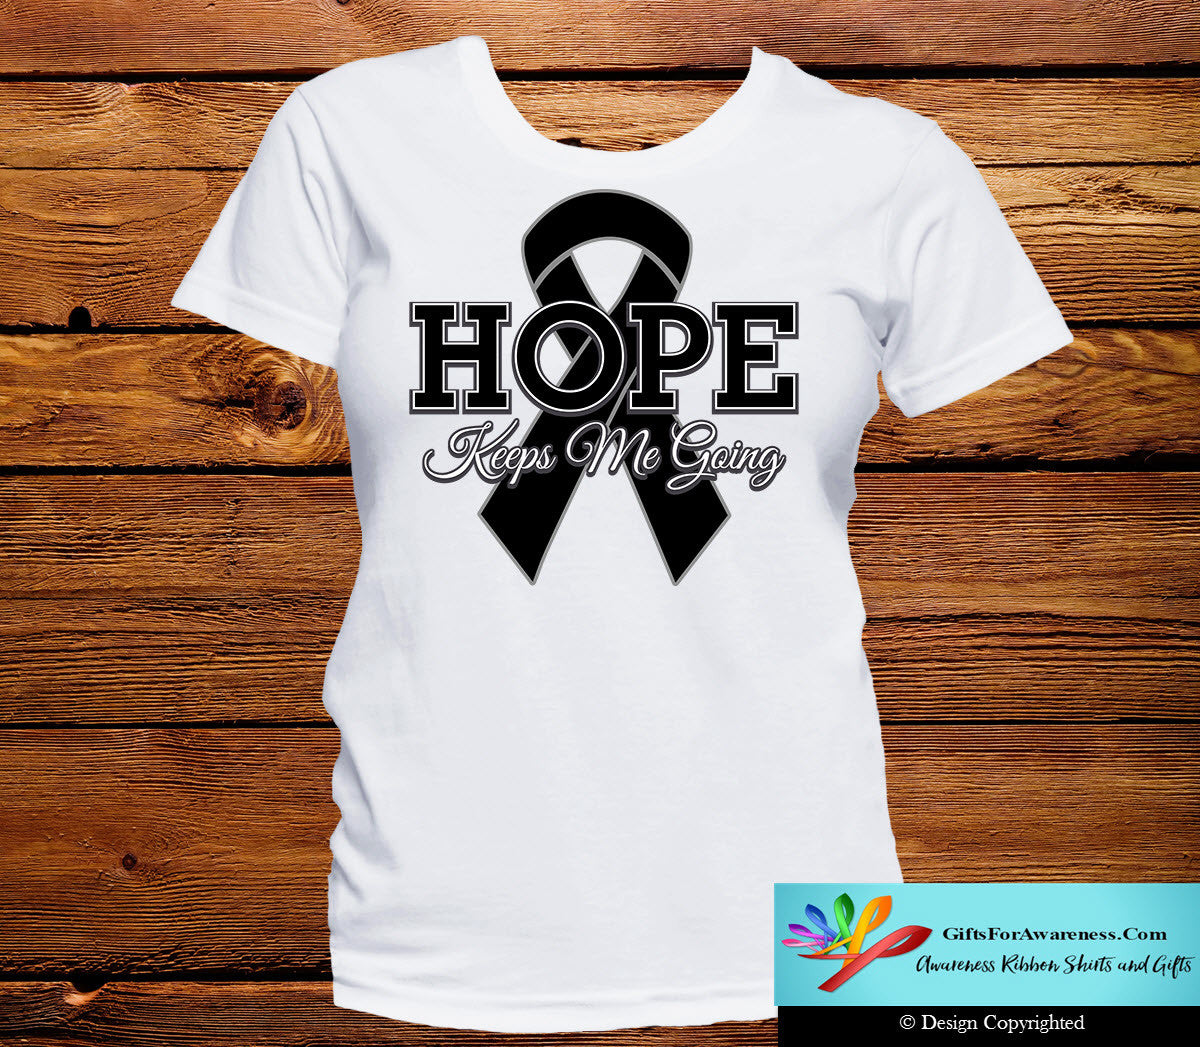 Skin Cancer Hope Keeps Me Going Shirts - GiftsForAwareness